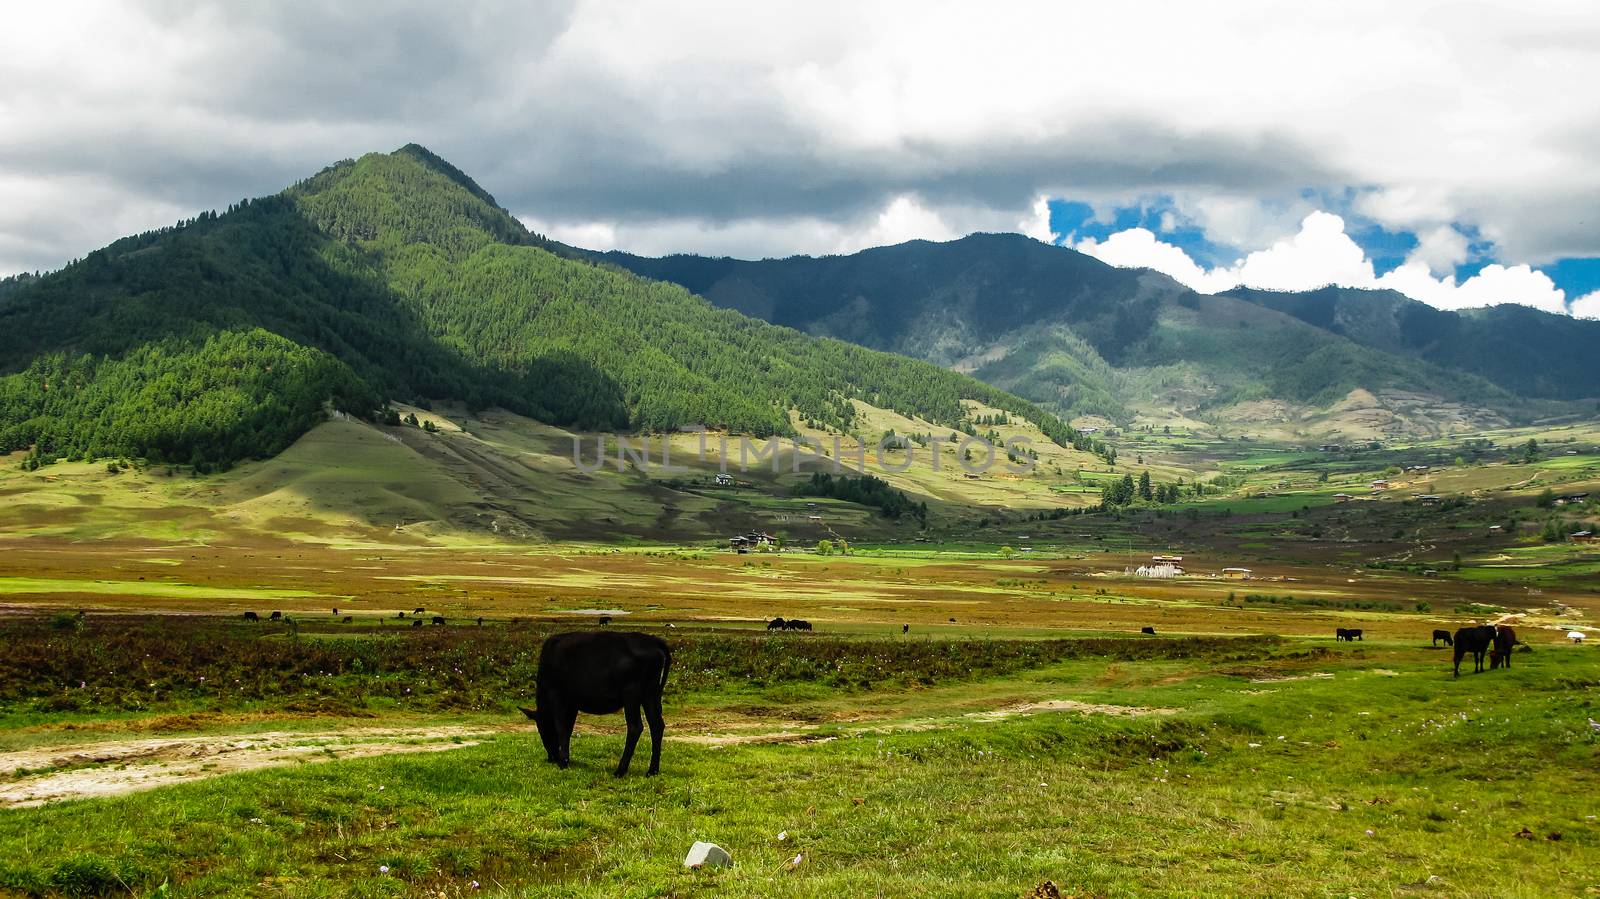 Landscape of mountain Phobjikha valley Himalayas, Bhutan by homocosmicos